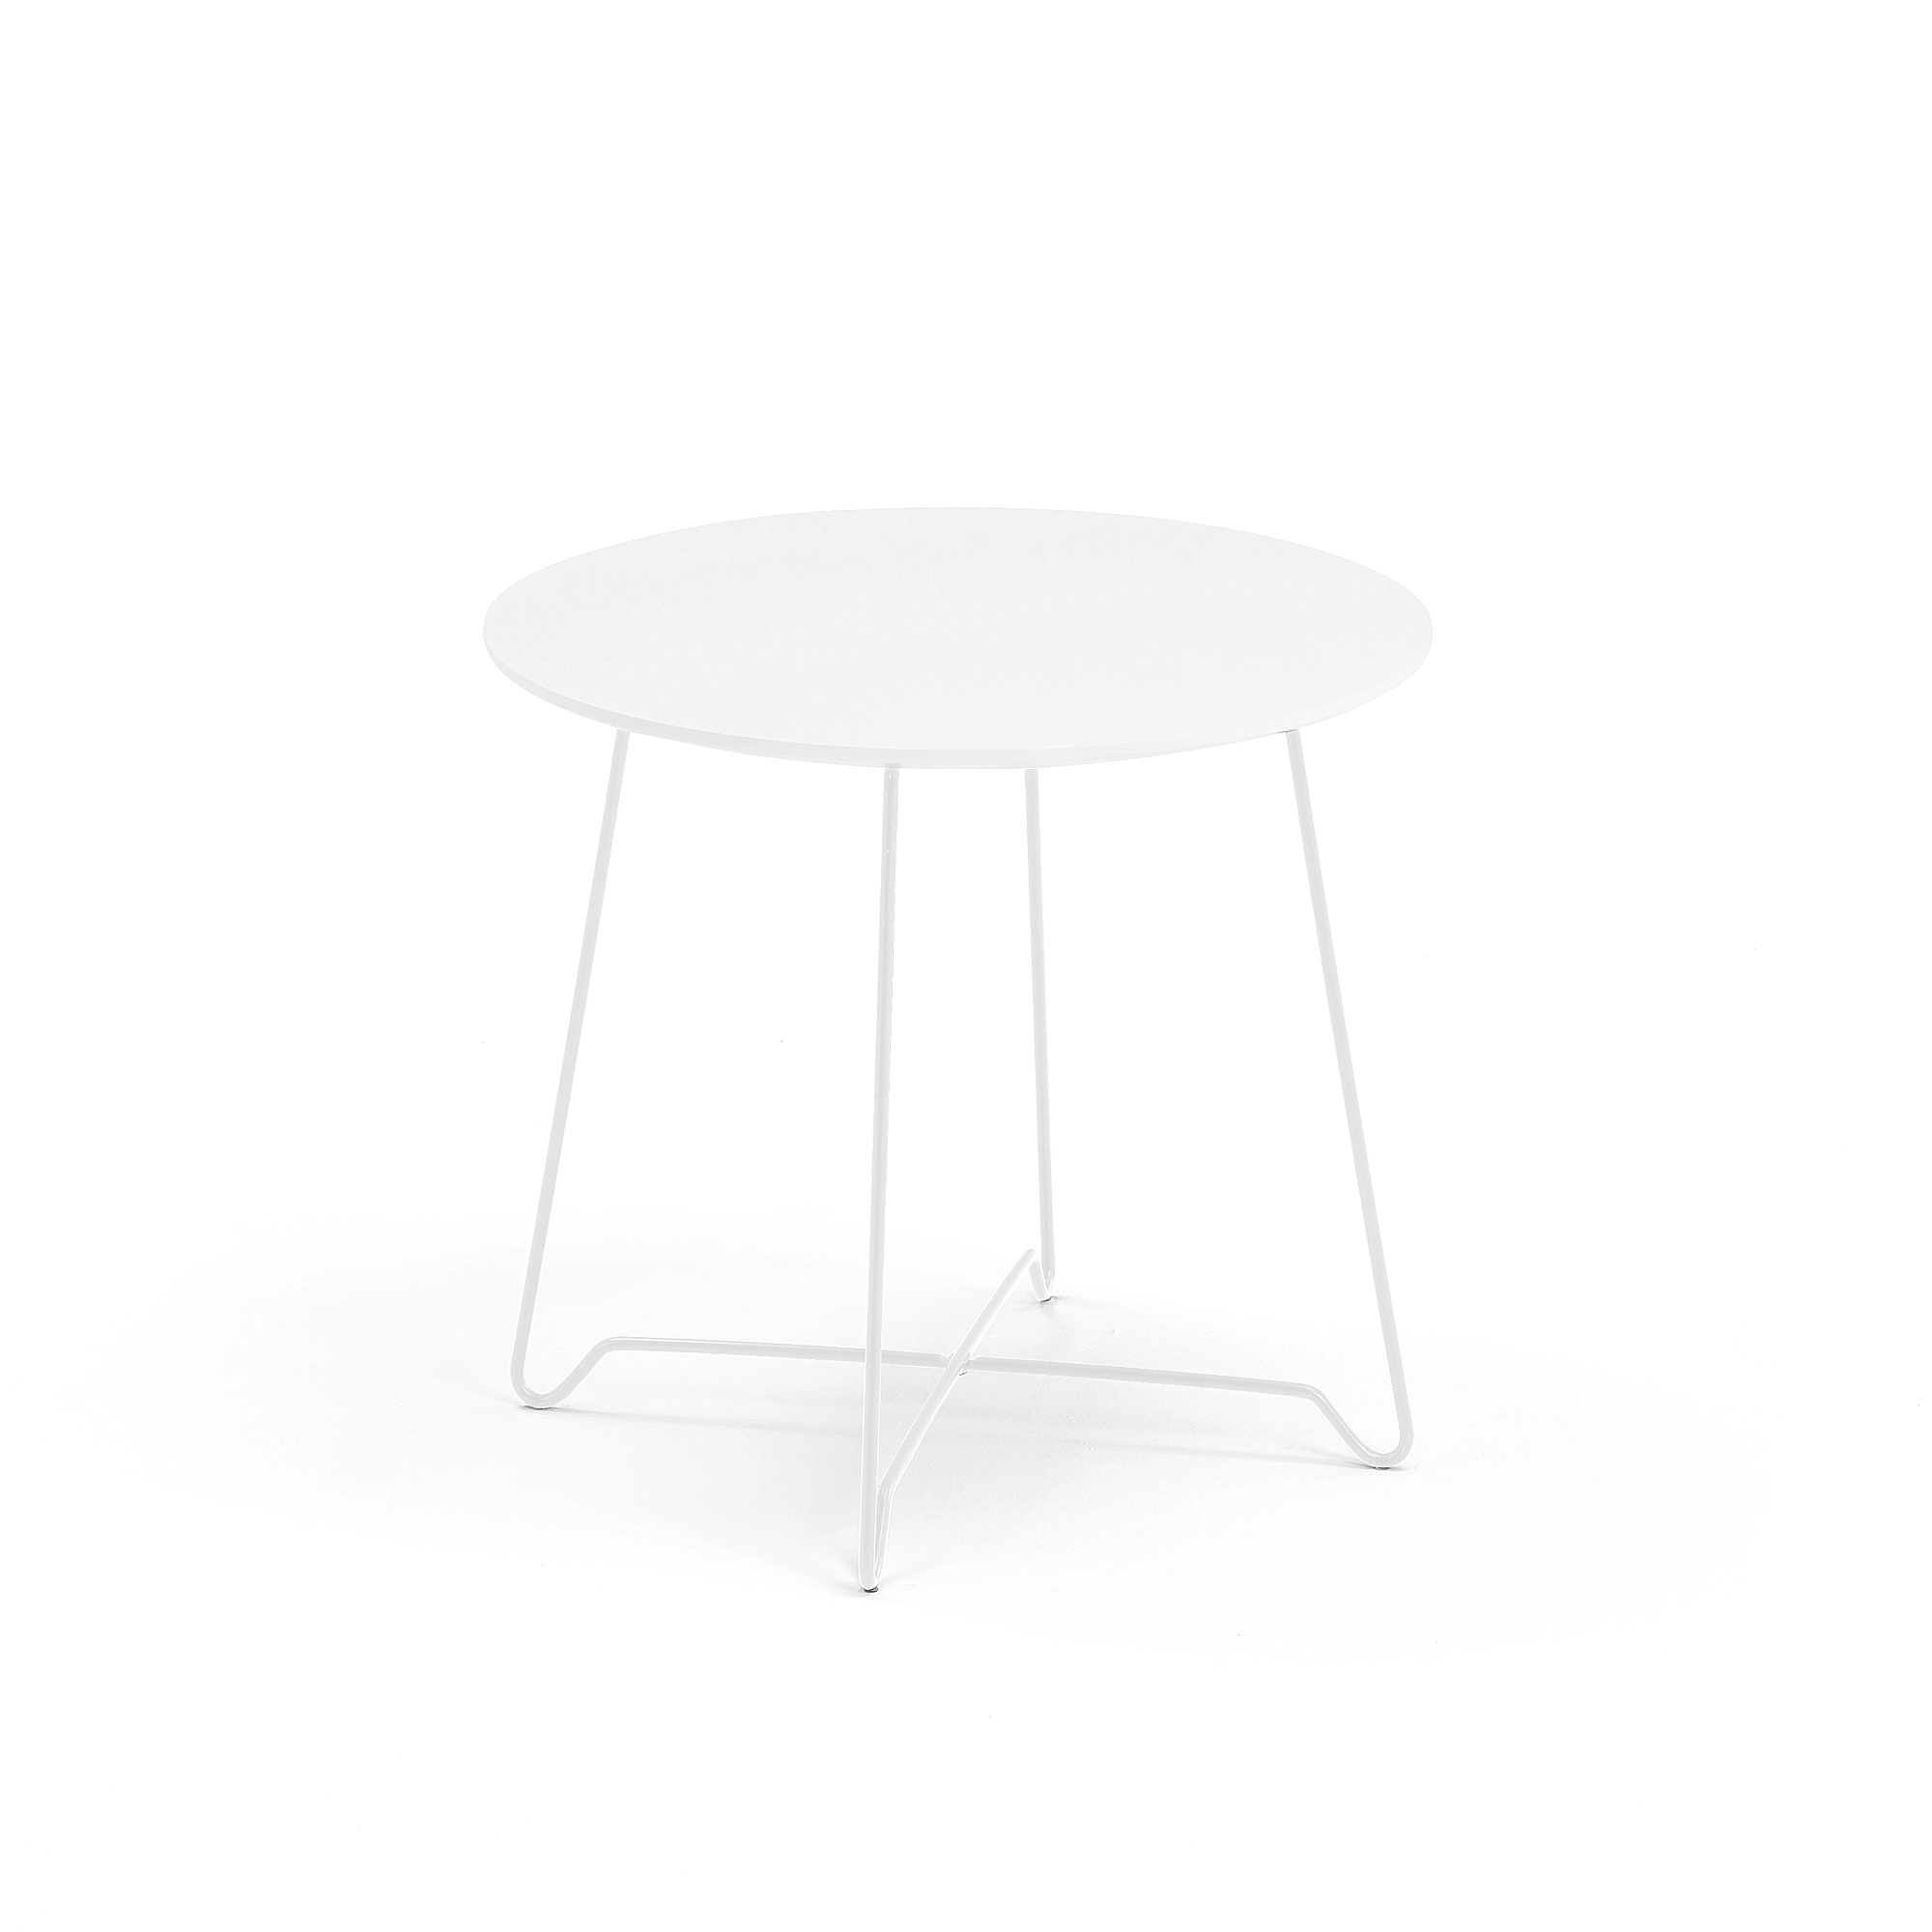 Konferenční stolek IRIS, Ø500 mm, bílá, bílá deska